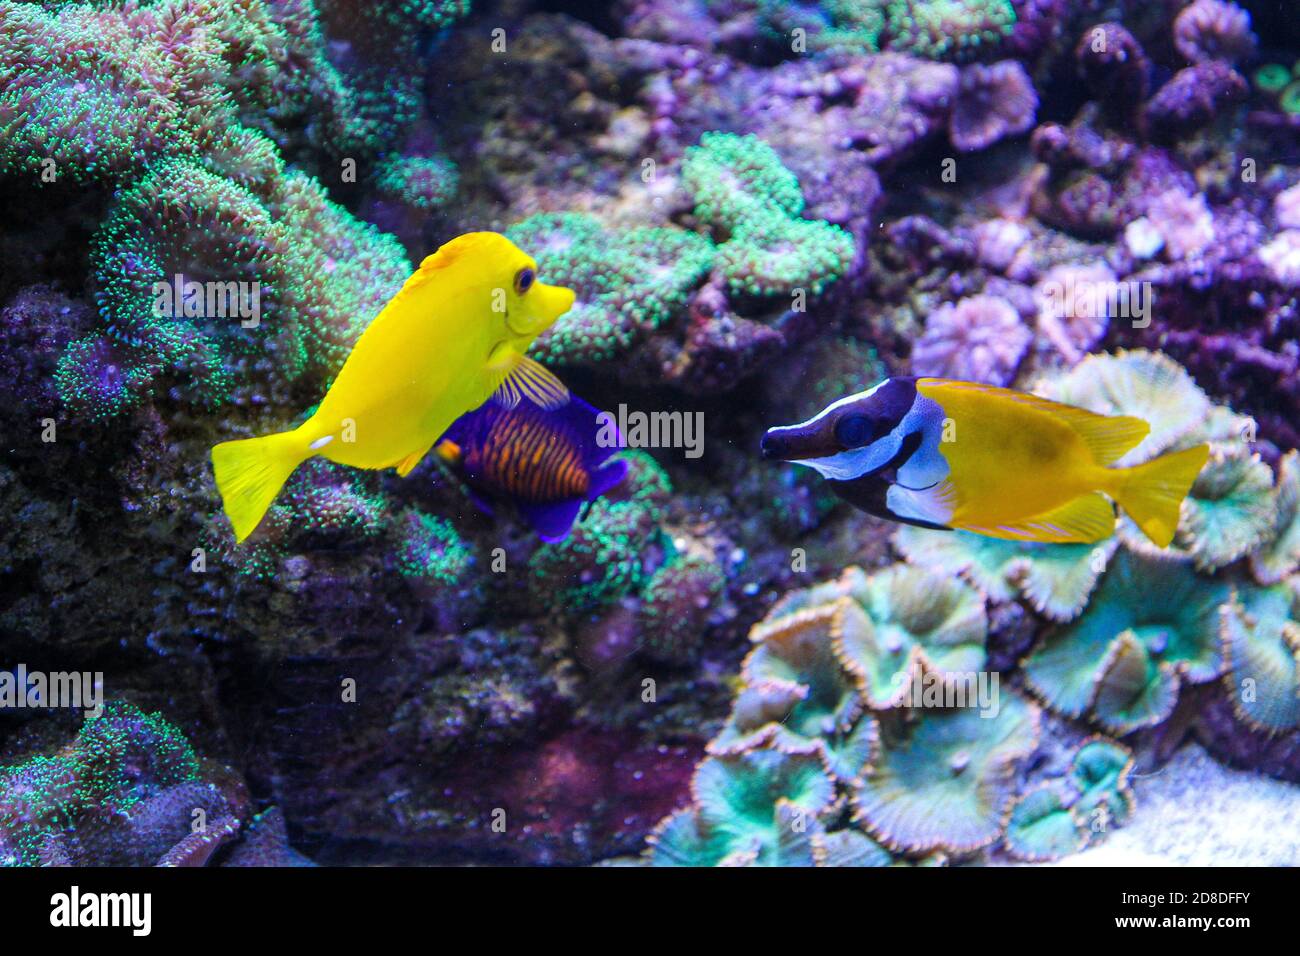 Yellow ornamental fish in a fish tank Stock Photo